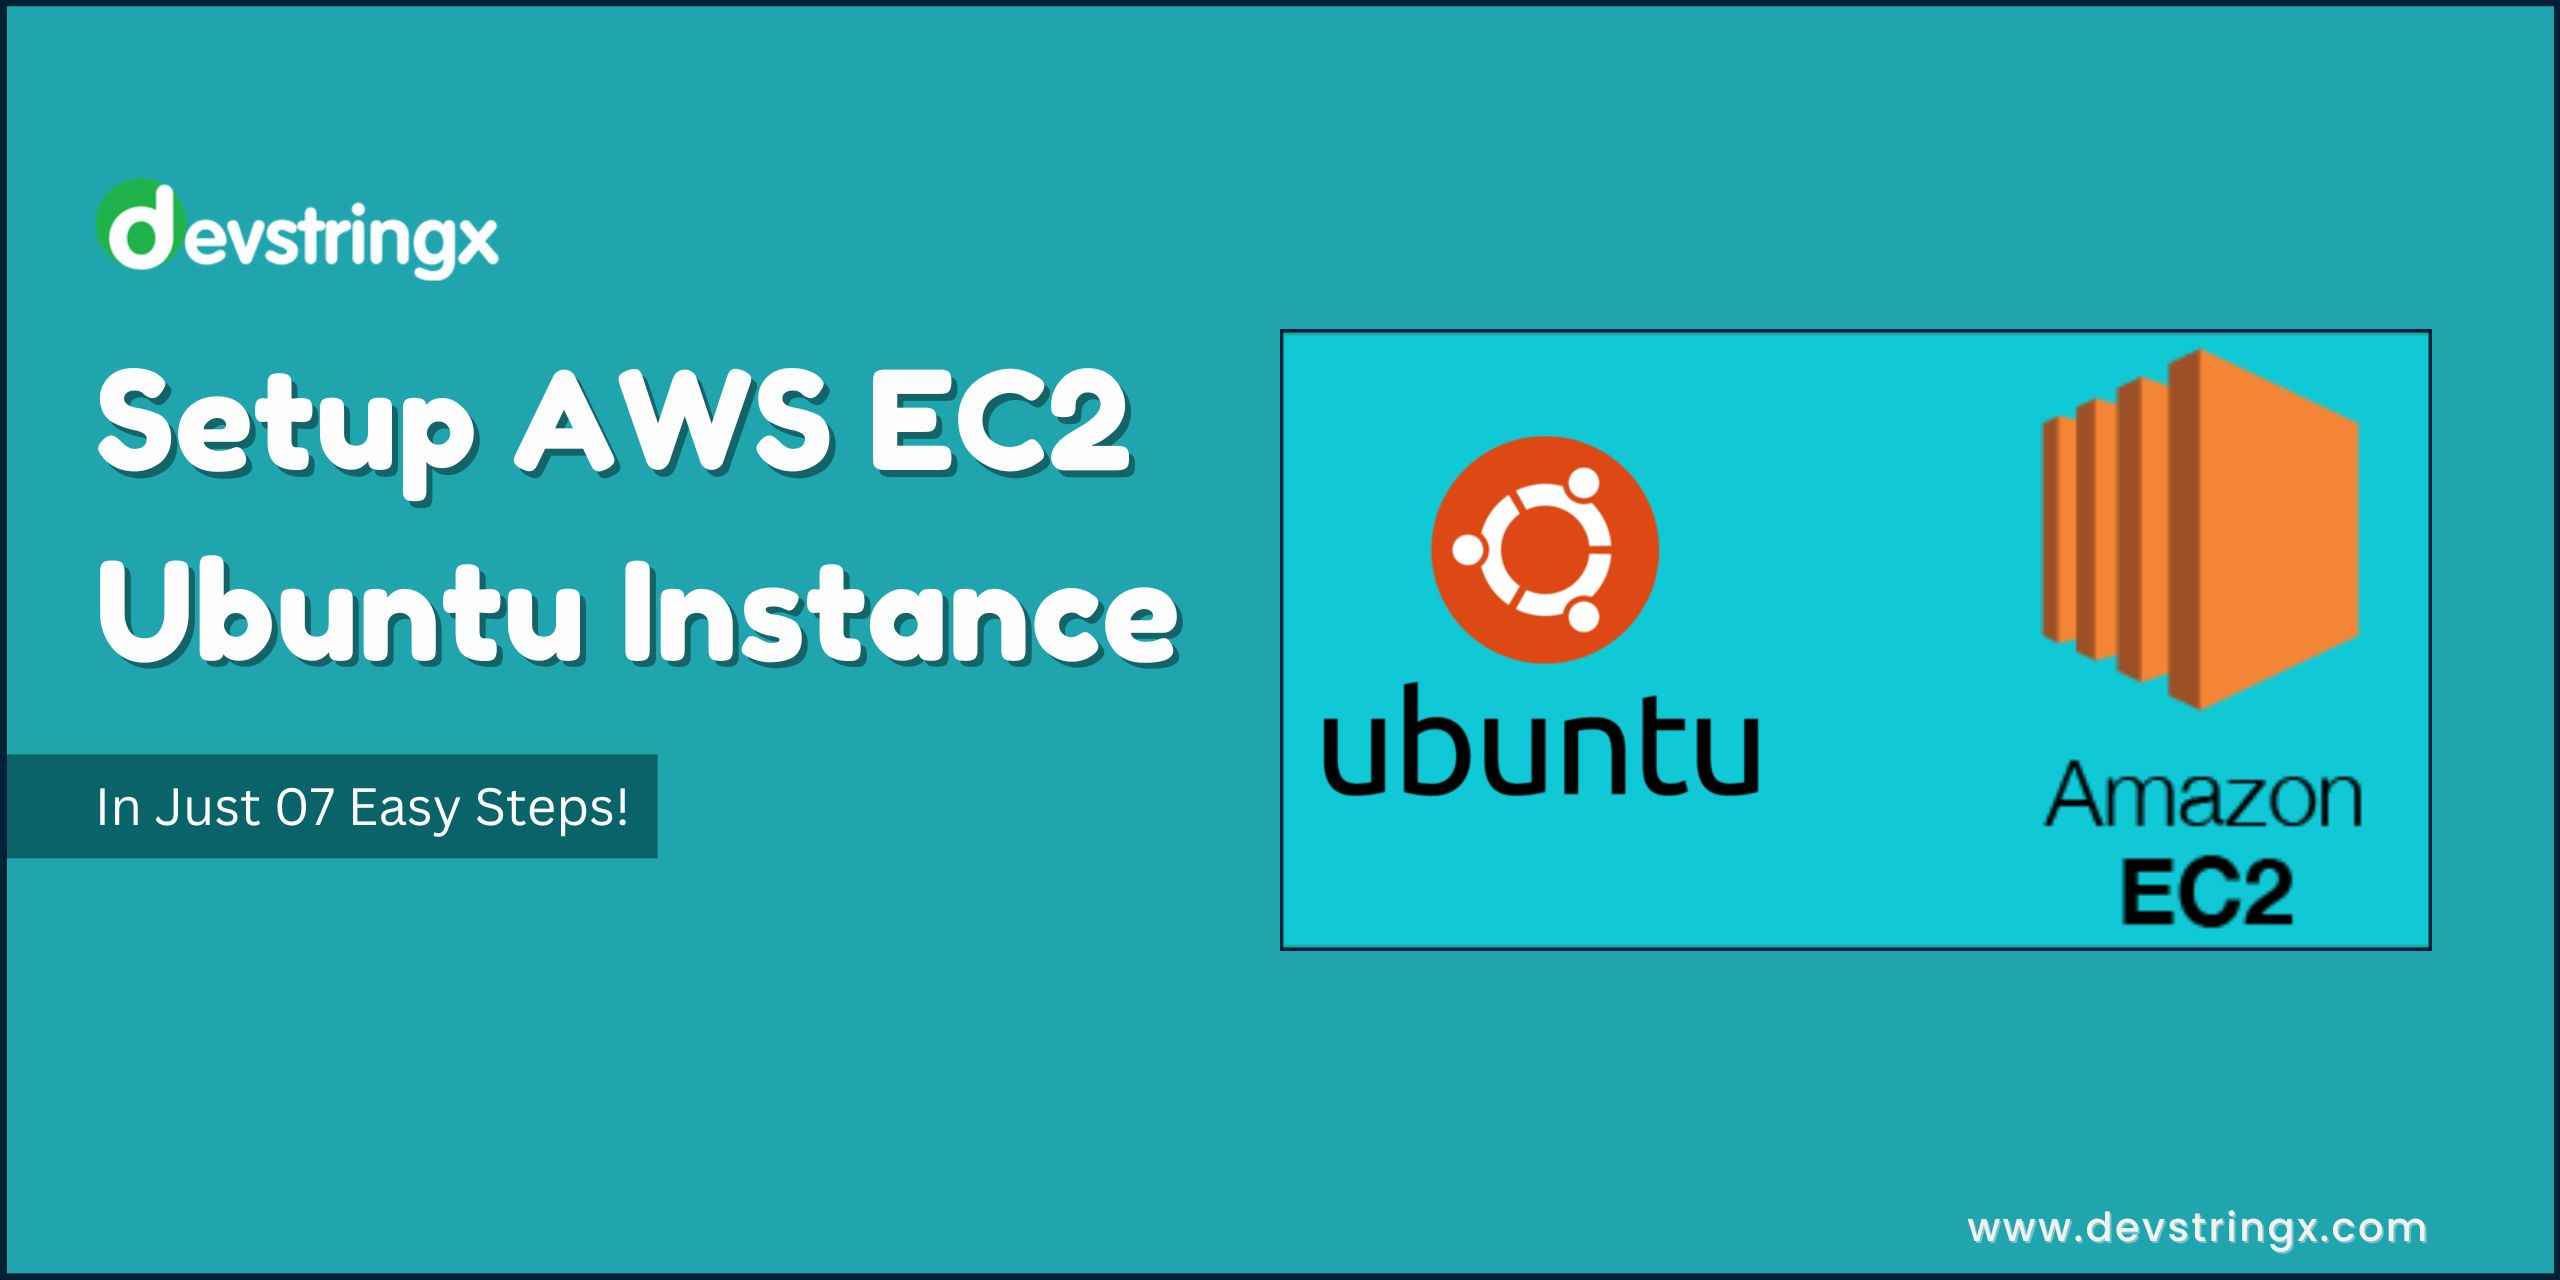 Feature image for Setup AWS EC2 Ubuntu blog